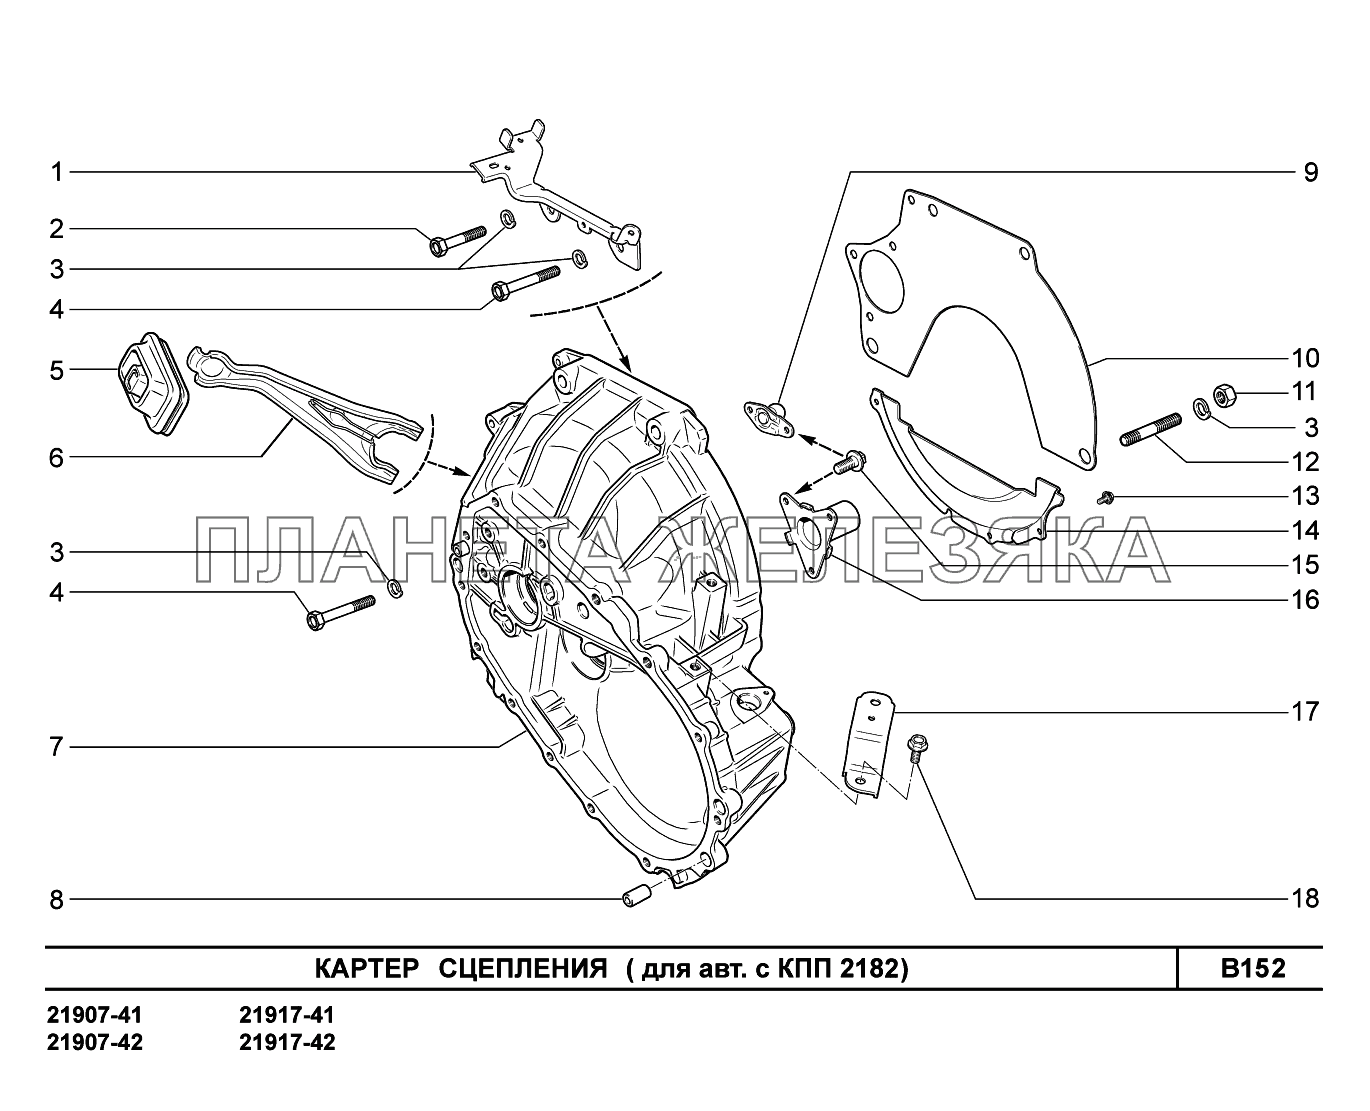 B152. Картер сцепления Lada Granta-2190